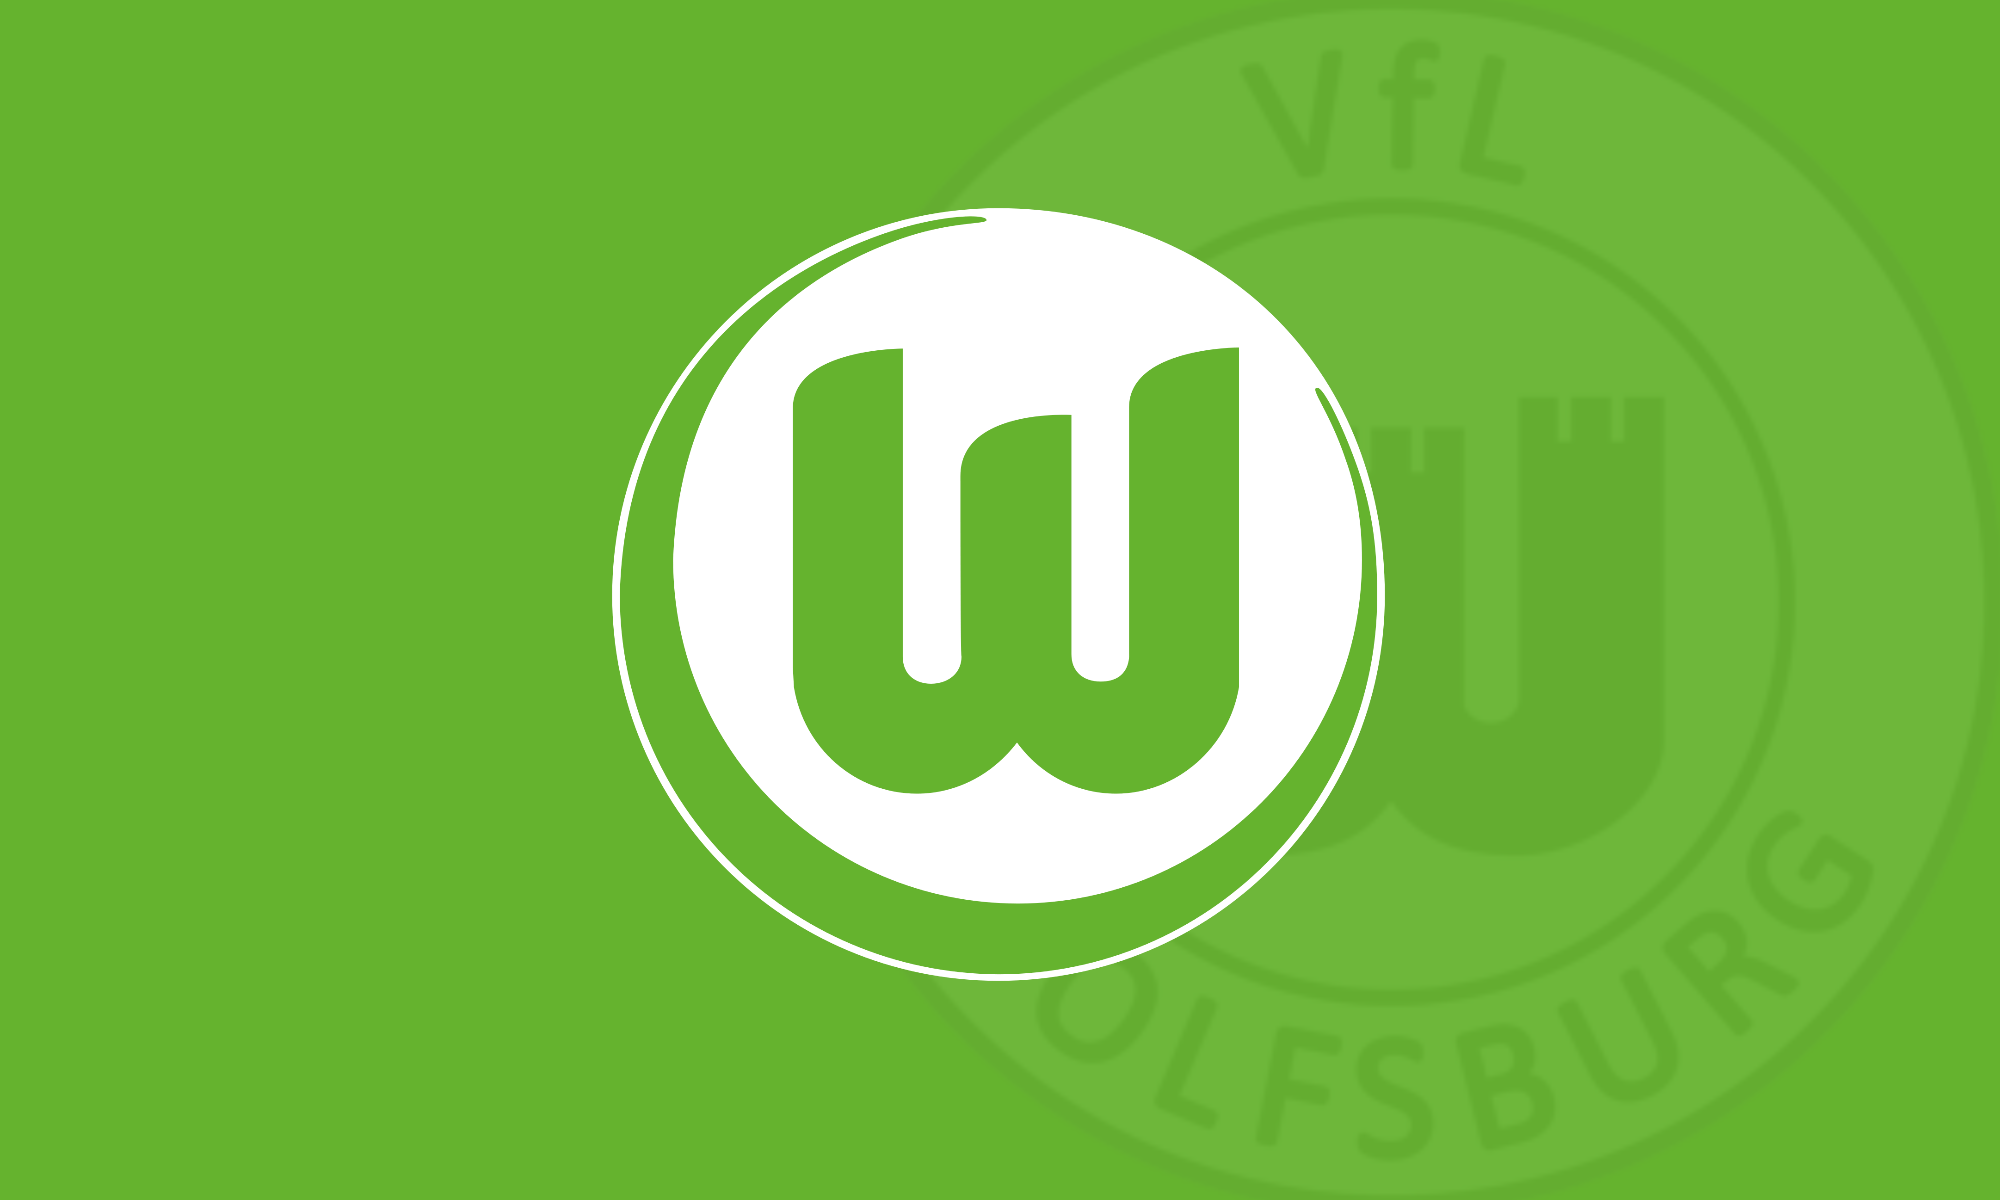 Original Wolfsburg Logo - VfL Wolfsburg wallpaper including retro badge [OC]